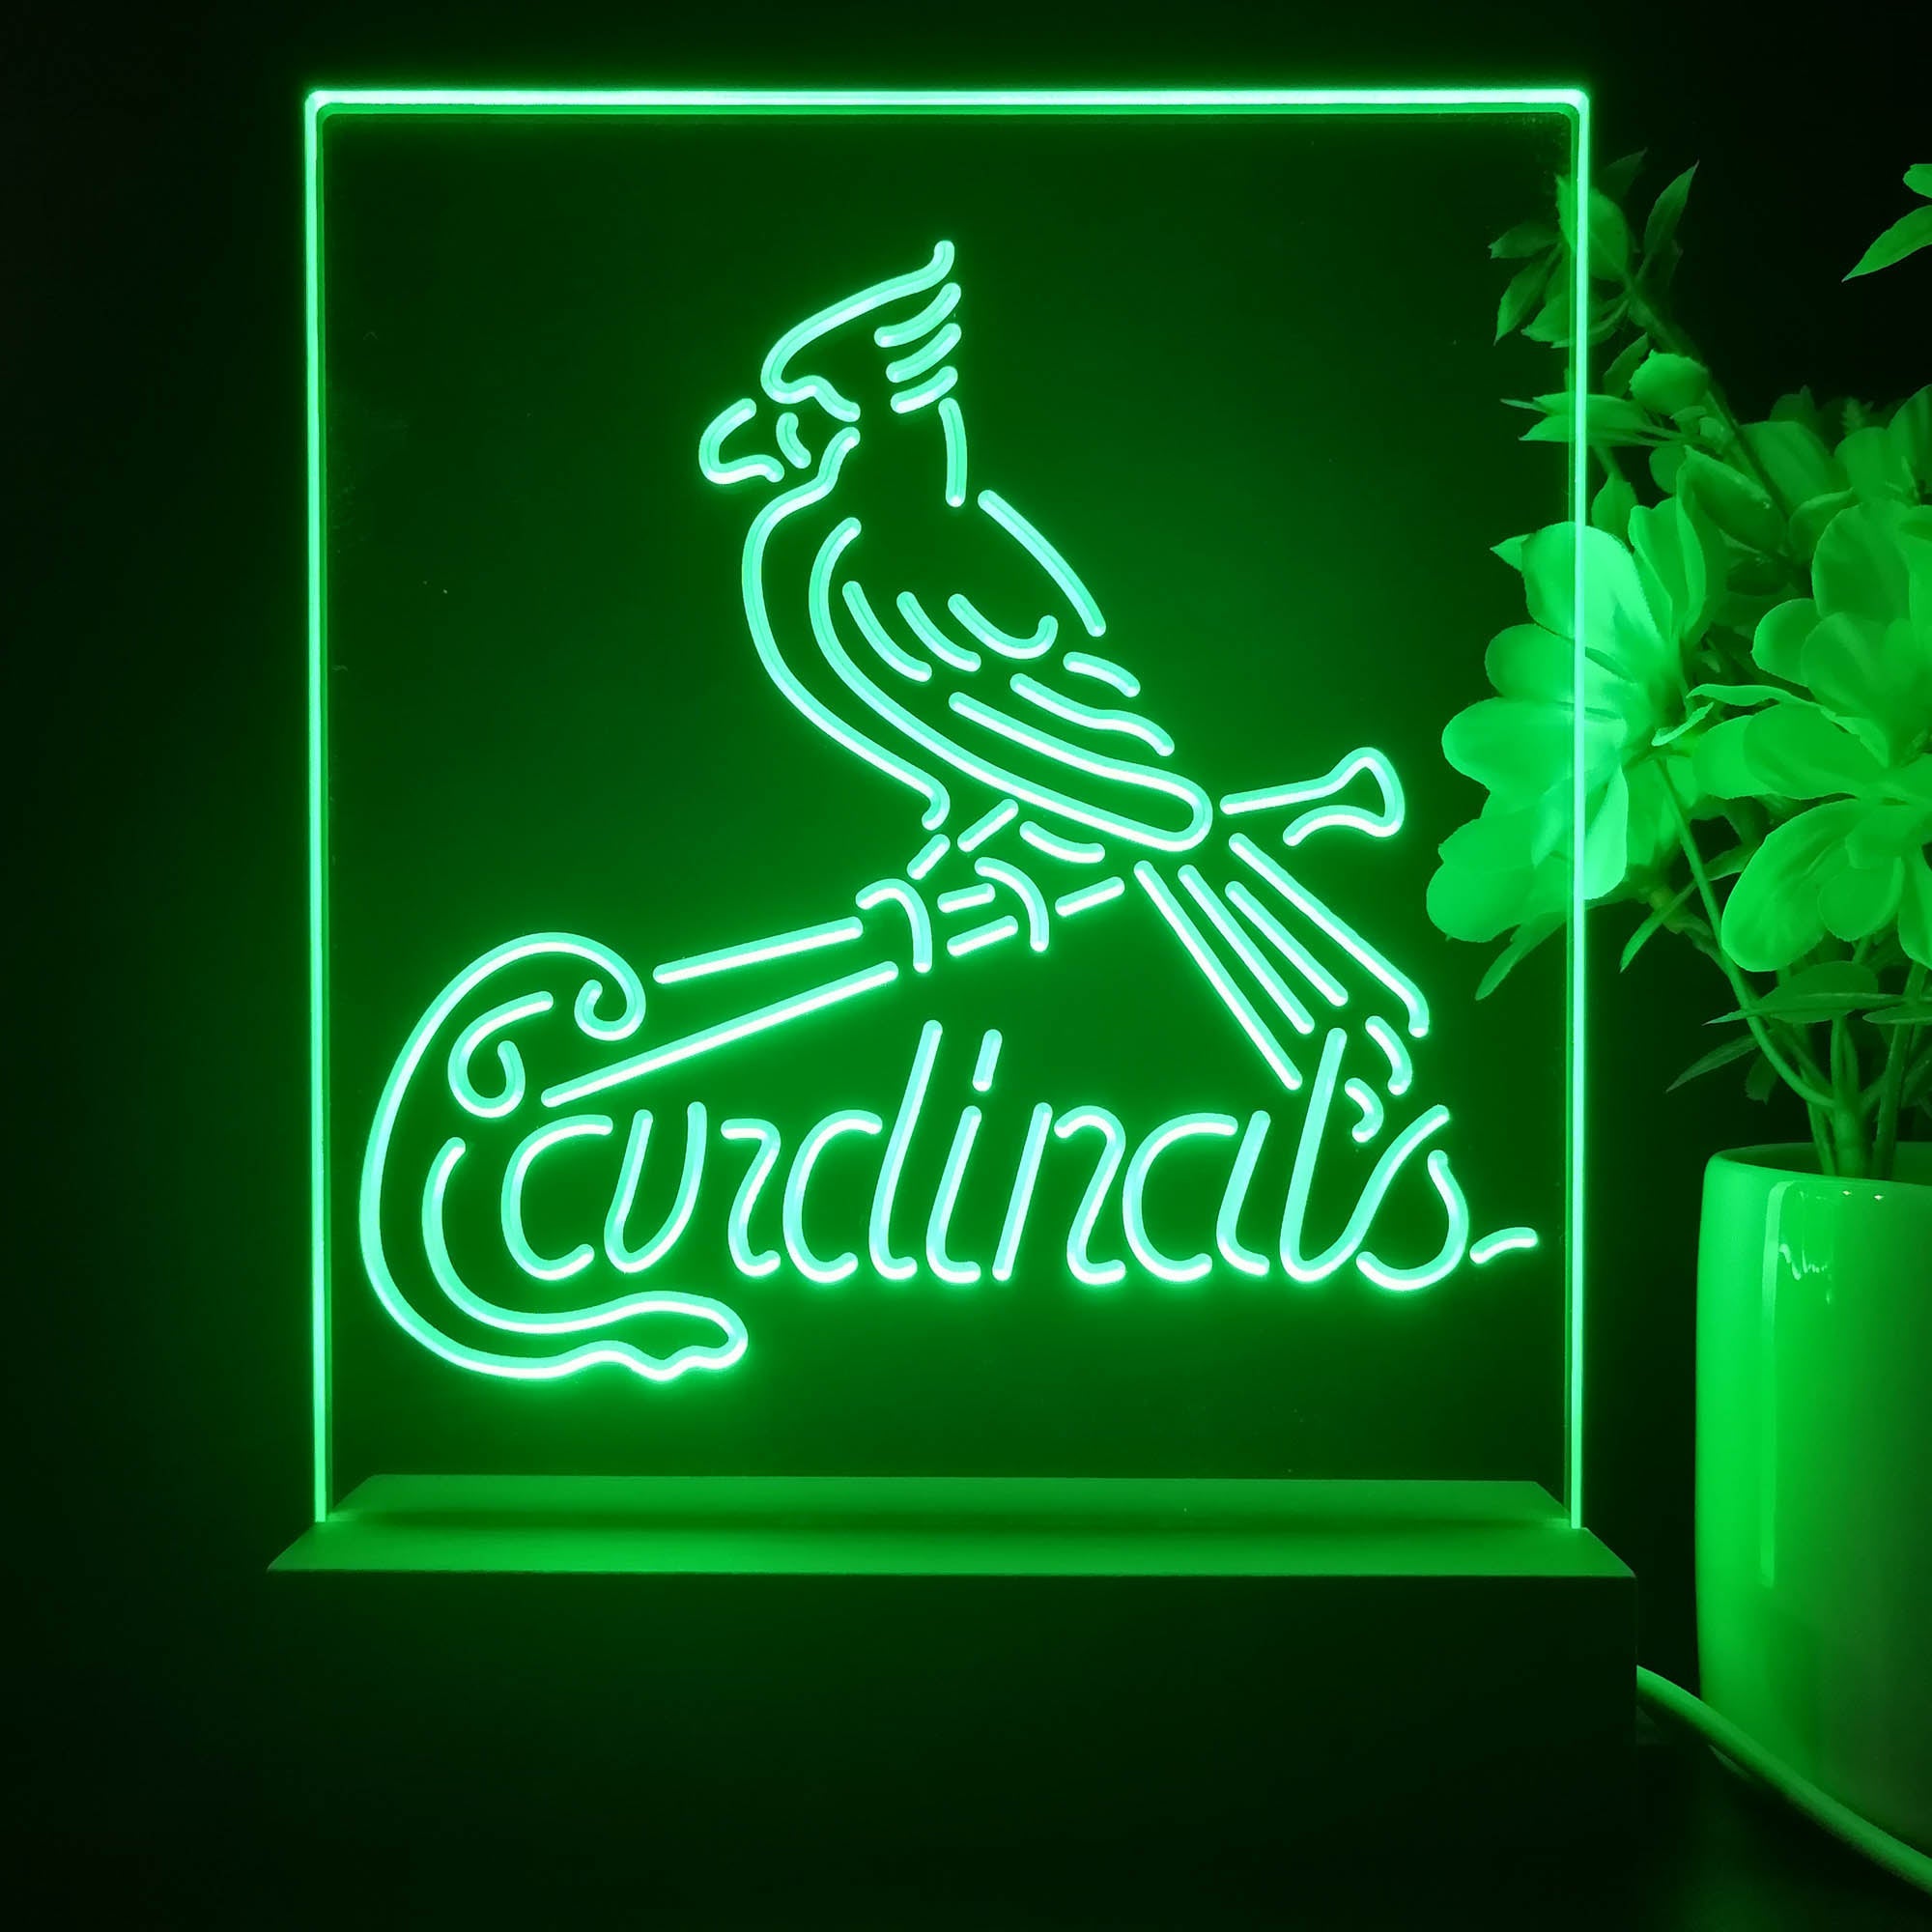 St Louis Cardinals LED Neon Sign Size 8x12